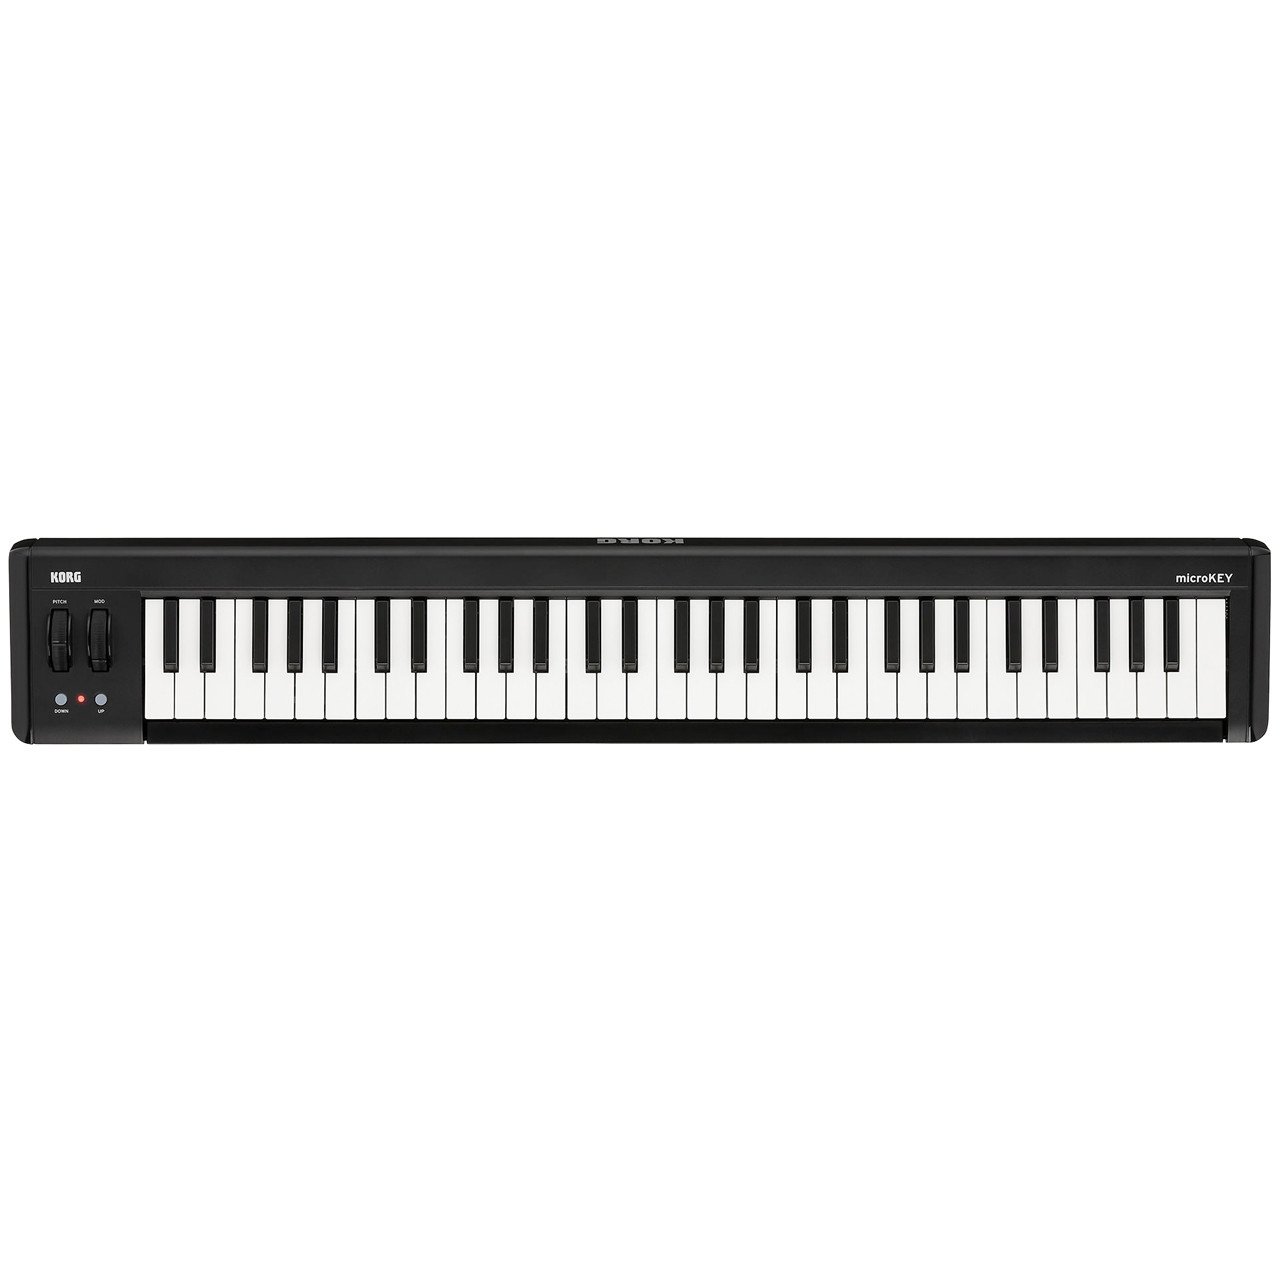 Controller Keyboards - Korg MicroKEY2 61 Key Compact MIDI Keyboard